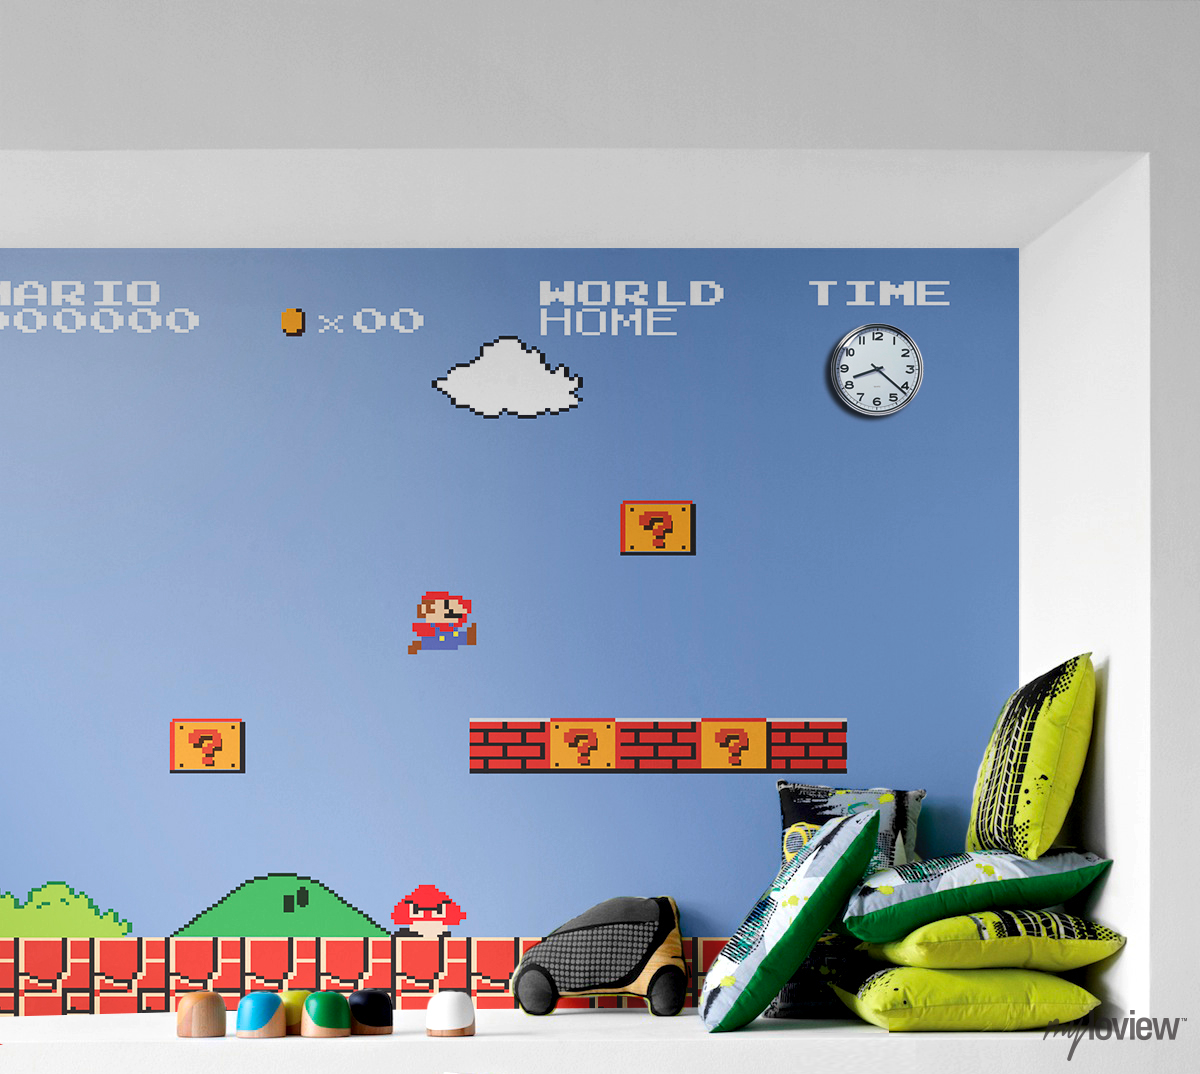 Retro video Games wallpaper sticker product wall decoration myloview